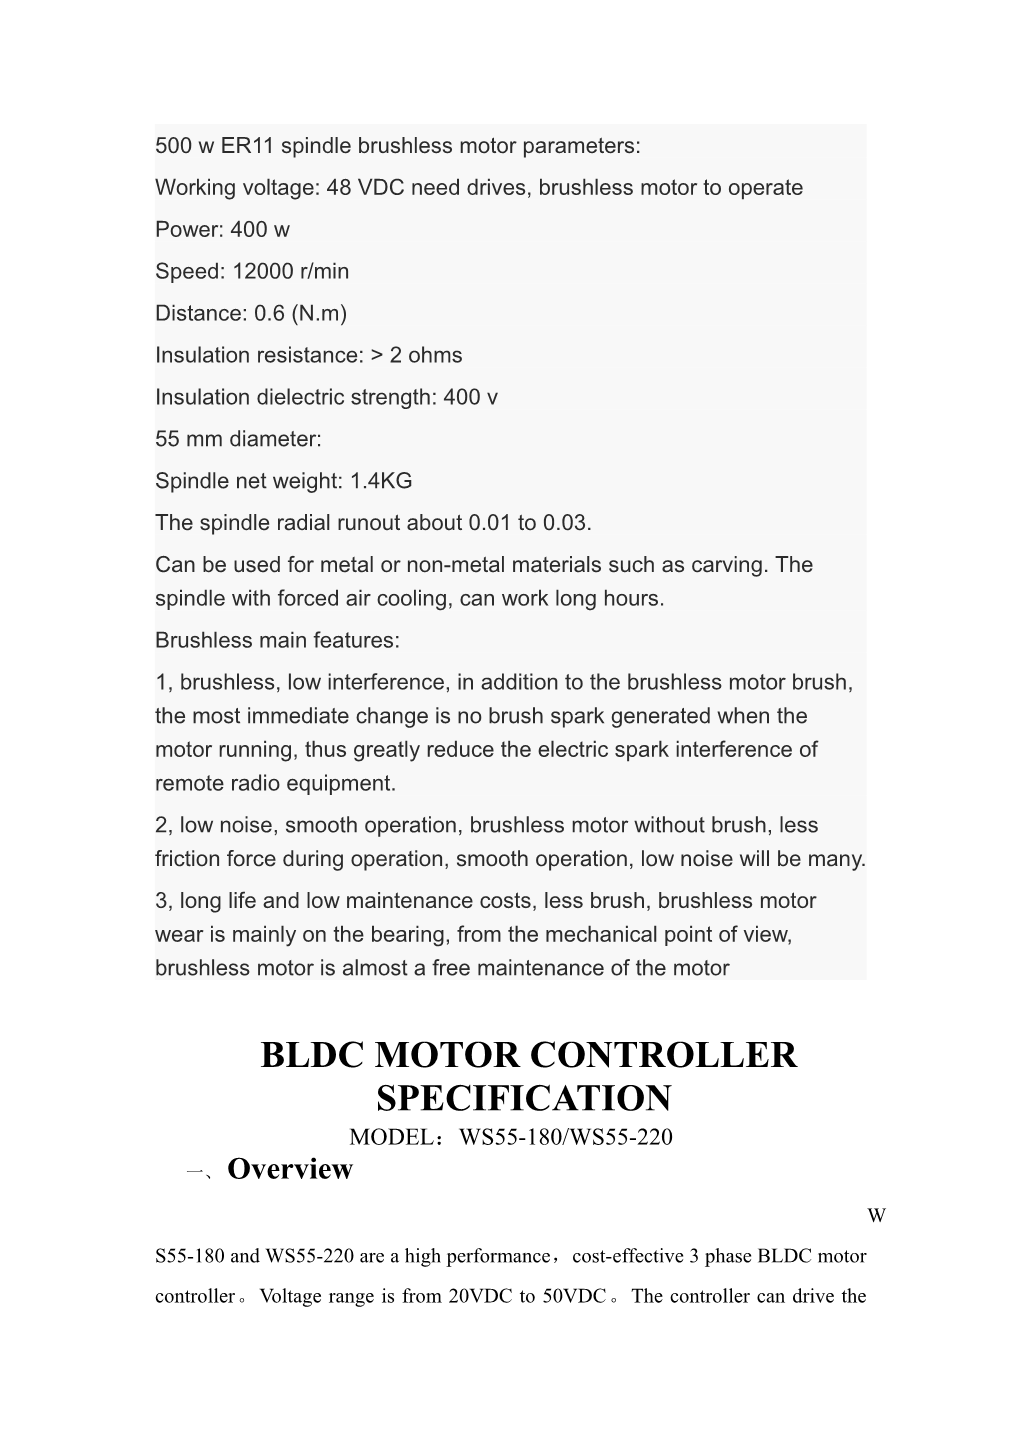 500 W ER11 Spindle Brushless Motor Parameters